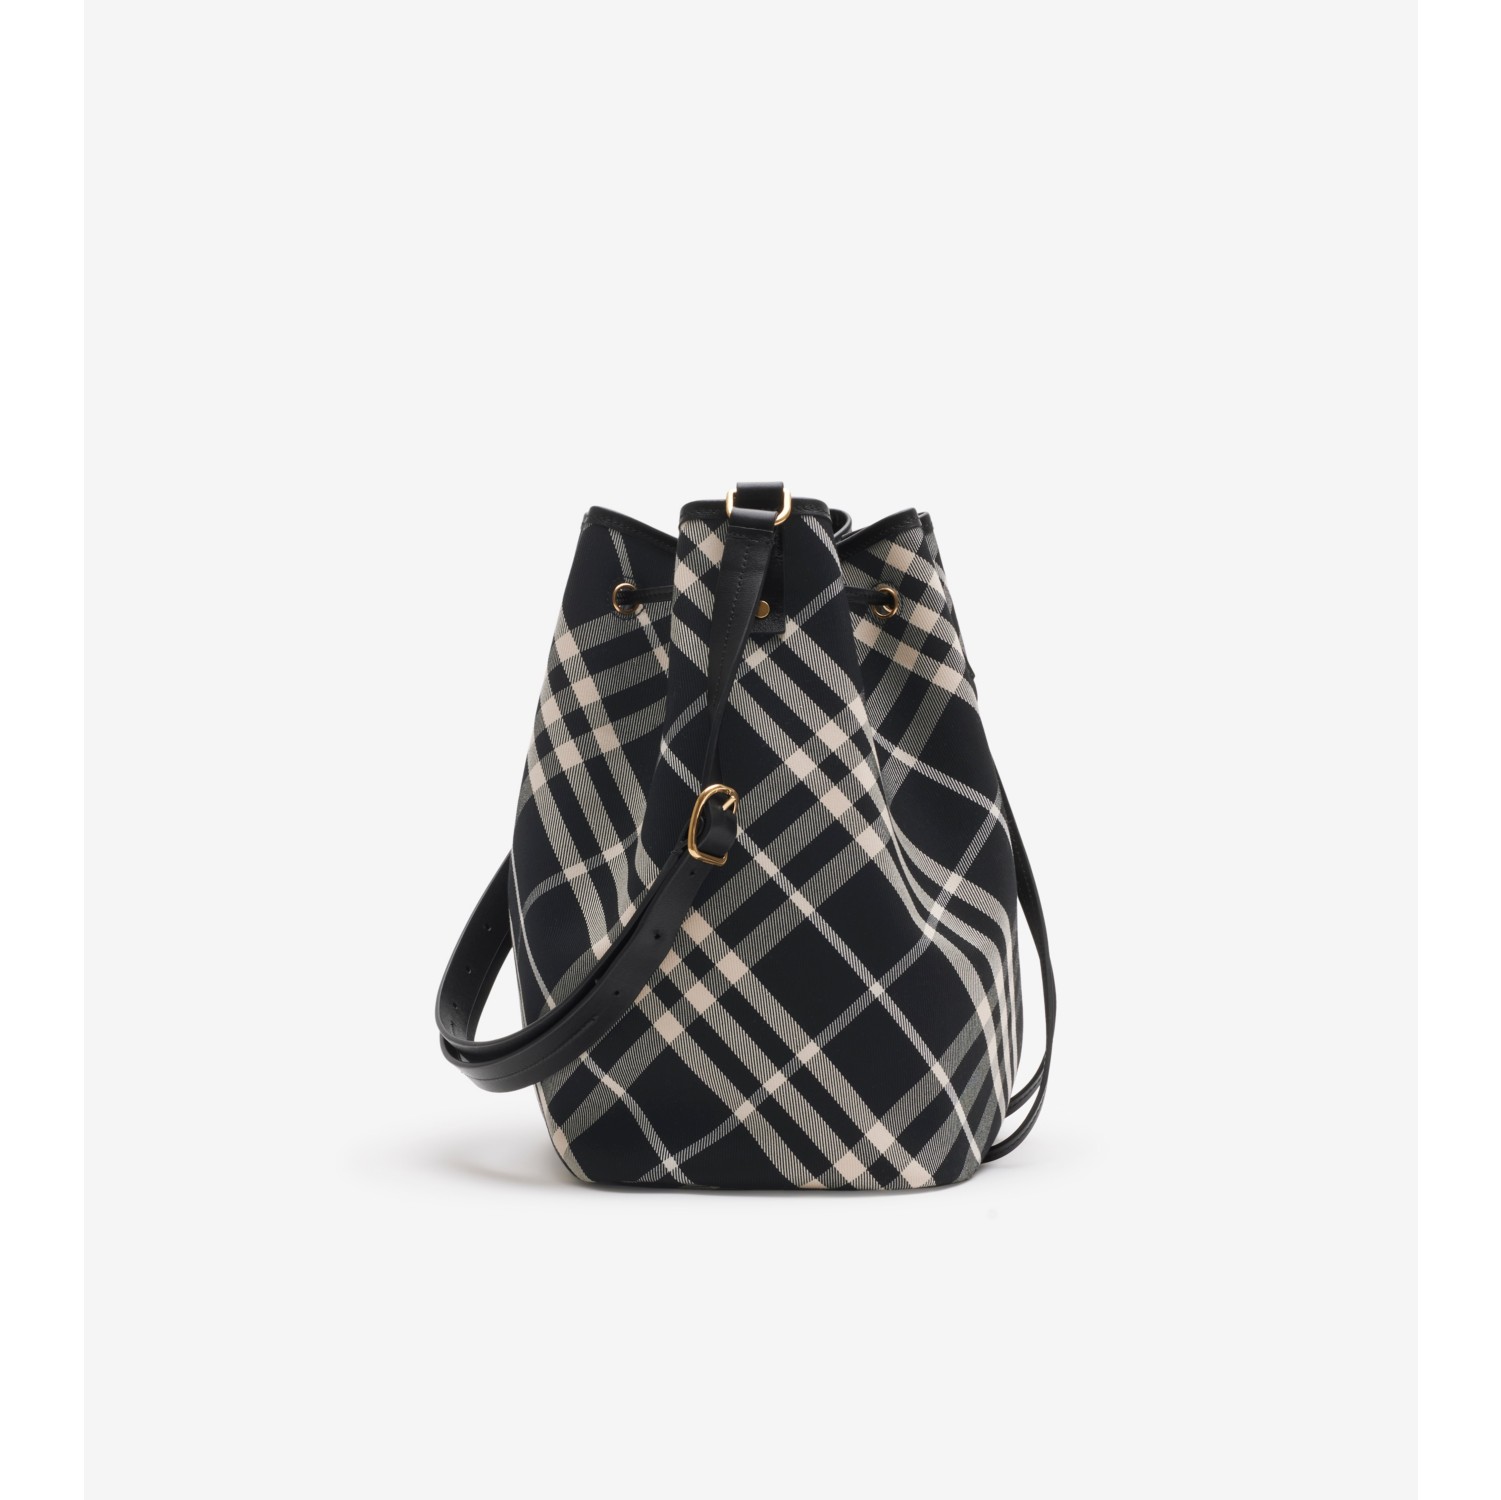 Medium Check Bucket Bag in Black/calico - Women | Burberry® Official